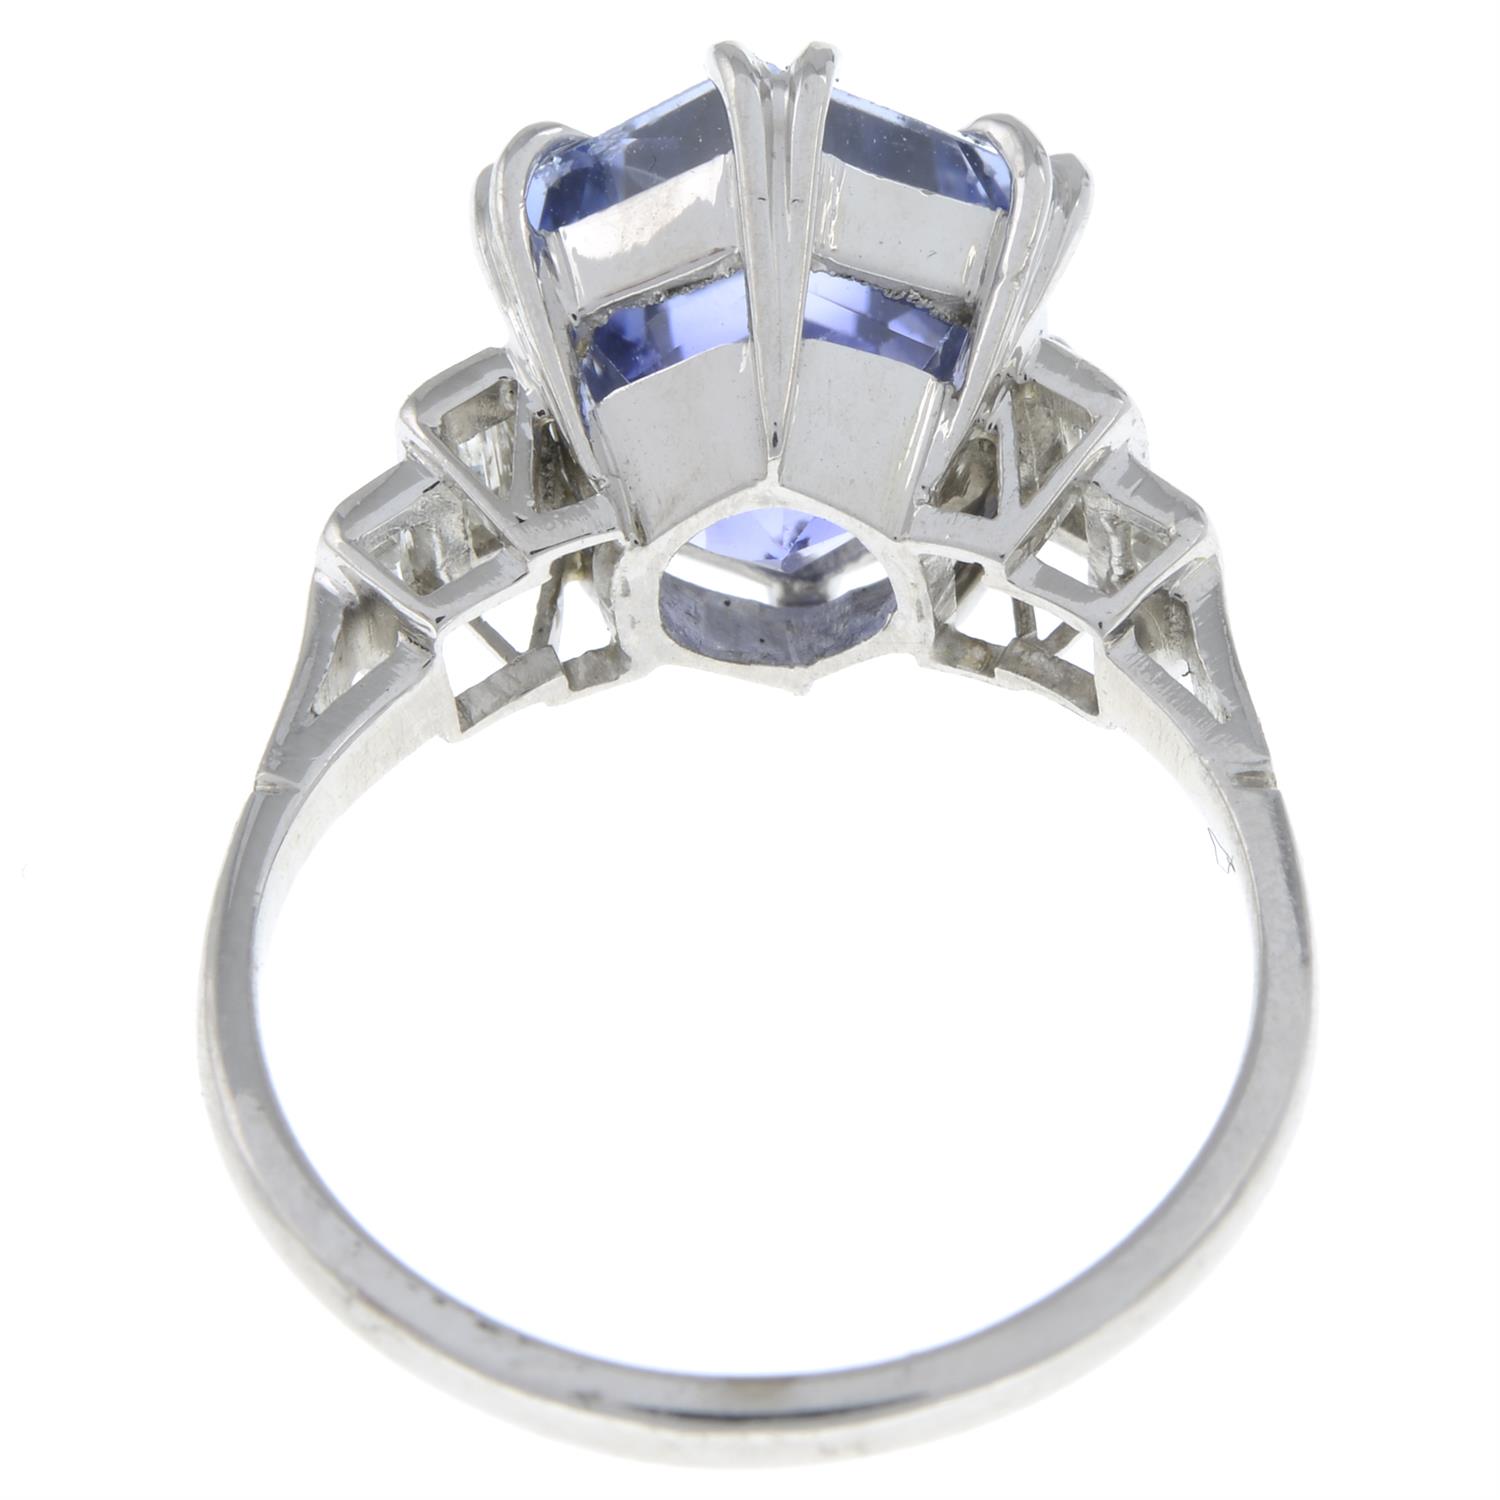 Sri Lankan sapphire and diamond ring - Image 3 of 4